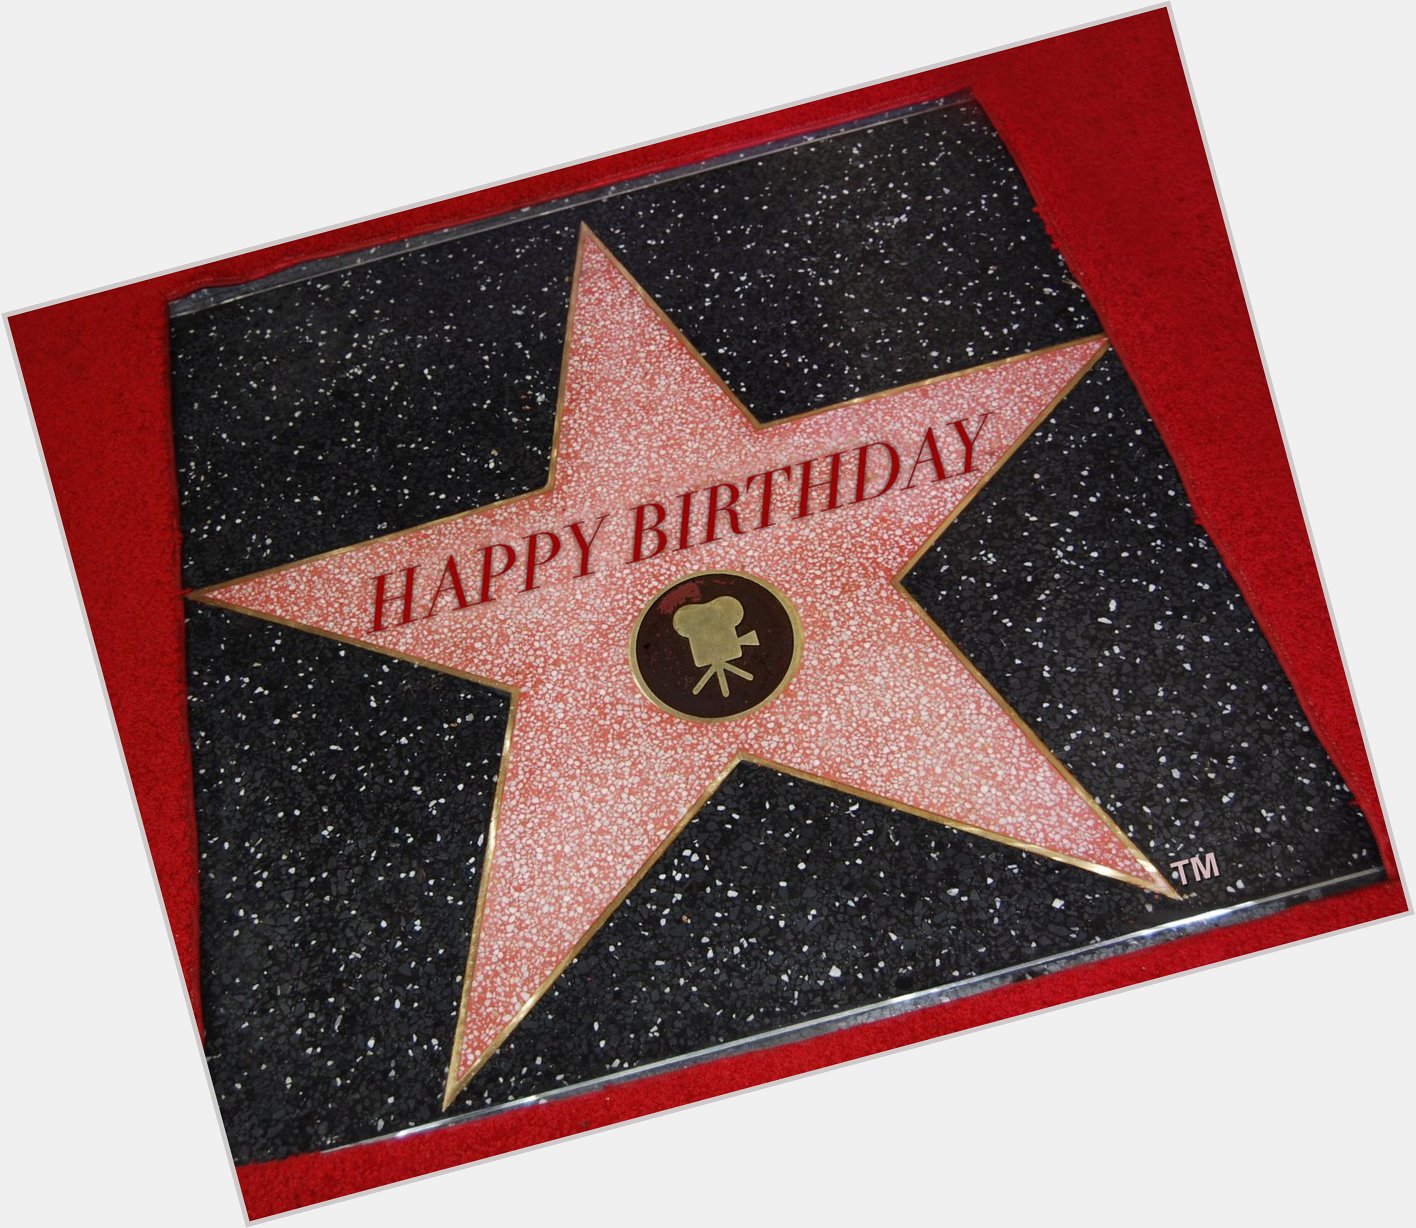 Happy Birthday to Walk of Famer Nicole Kidman! 